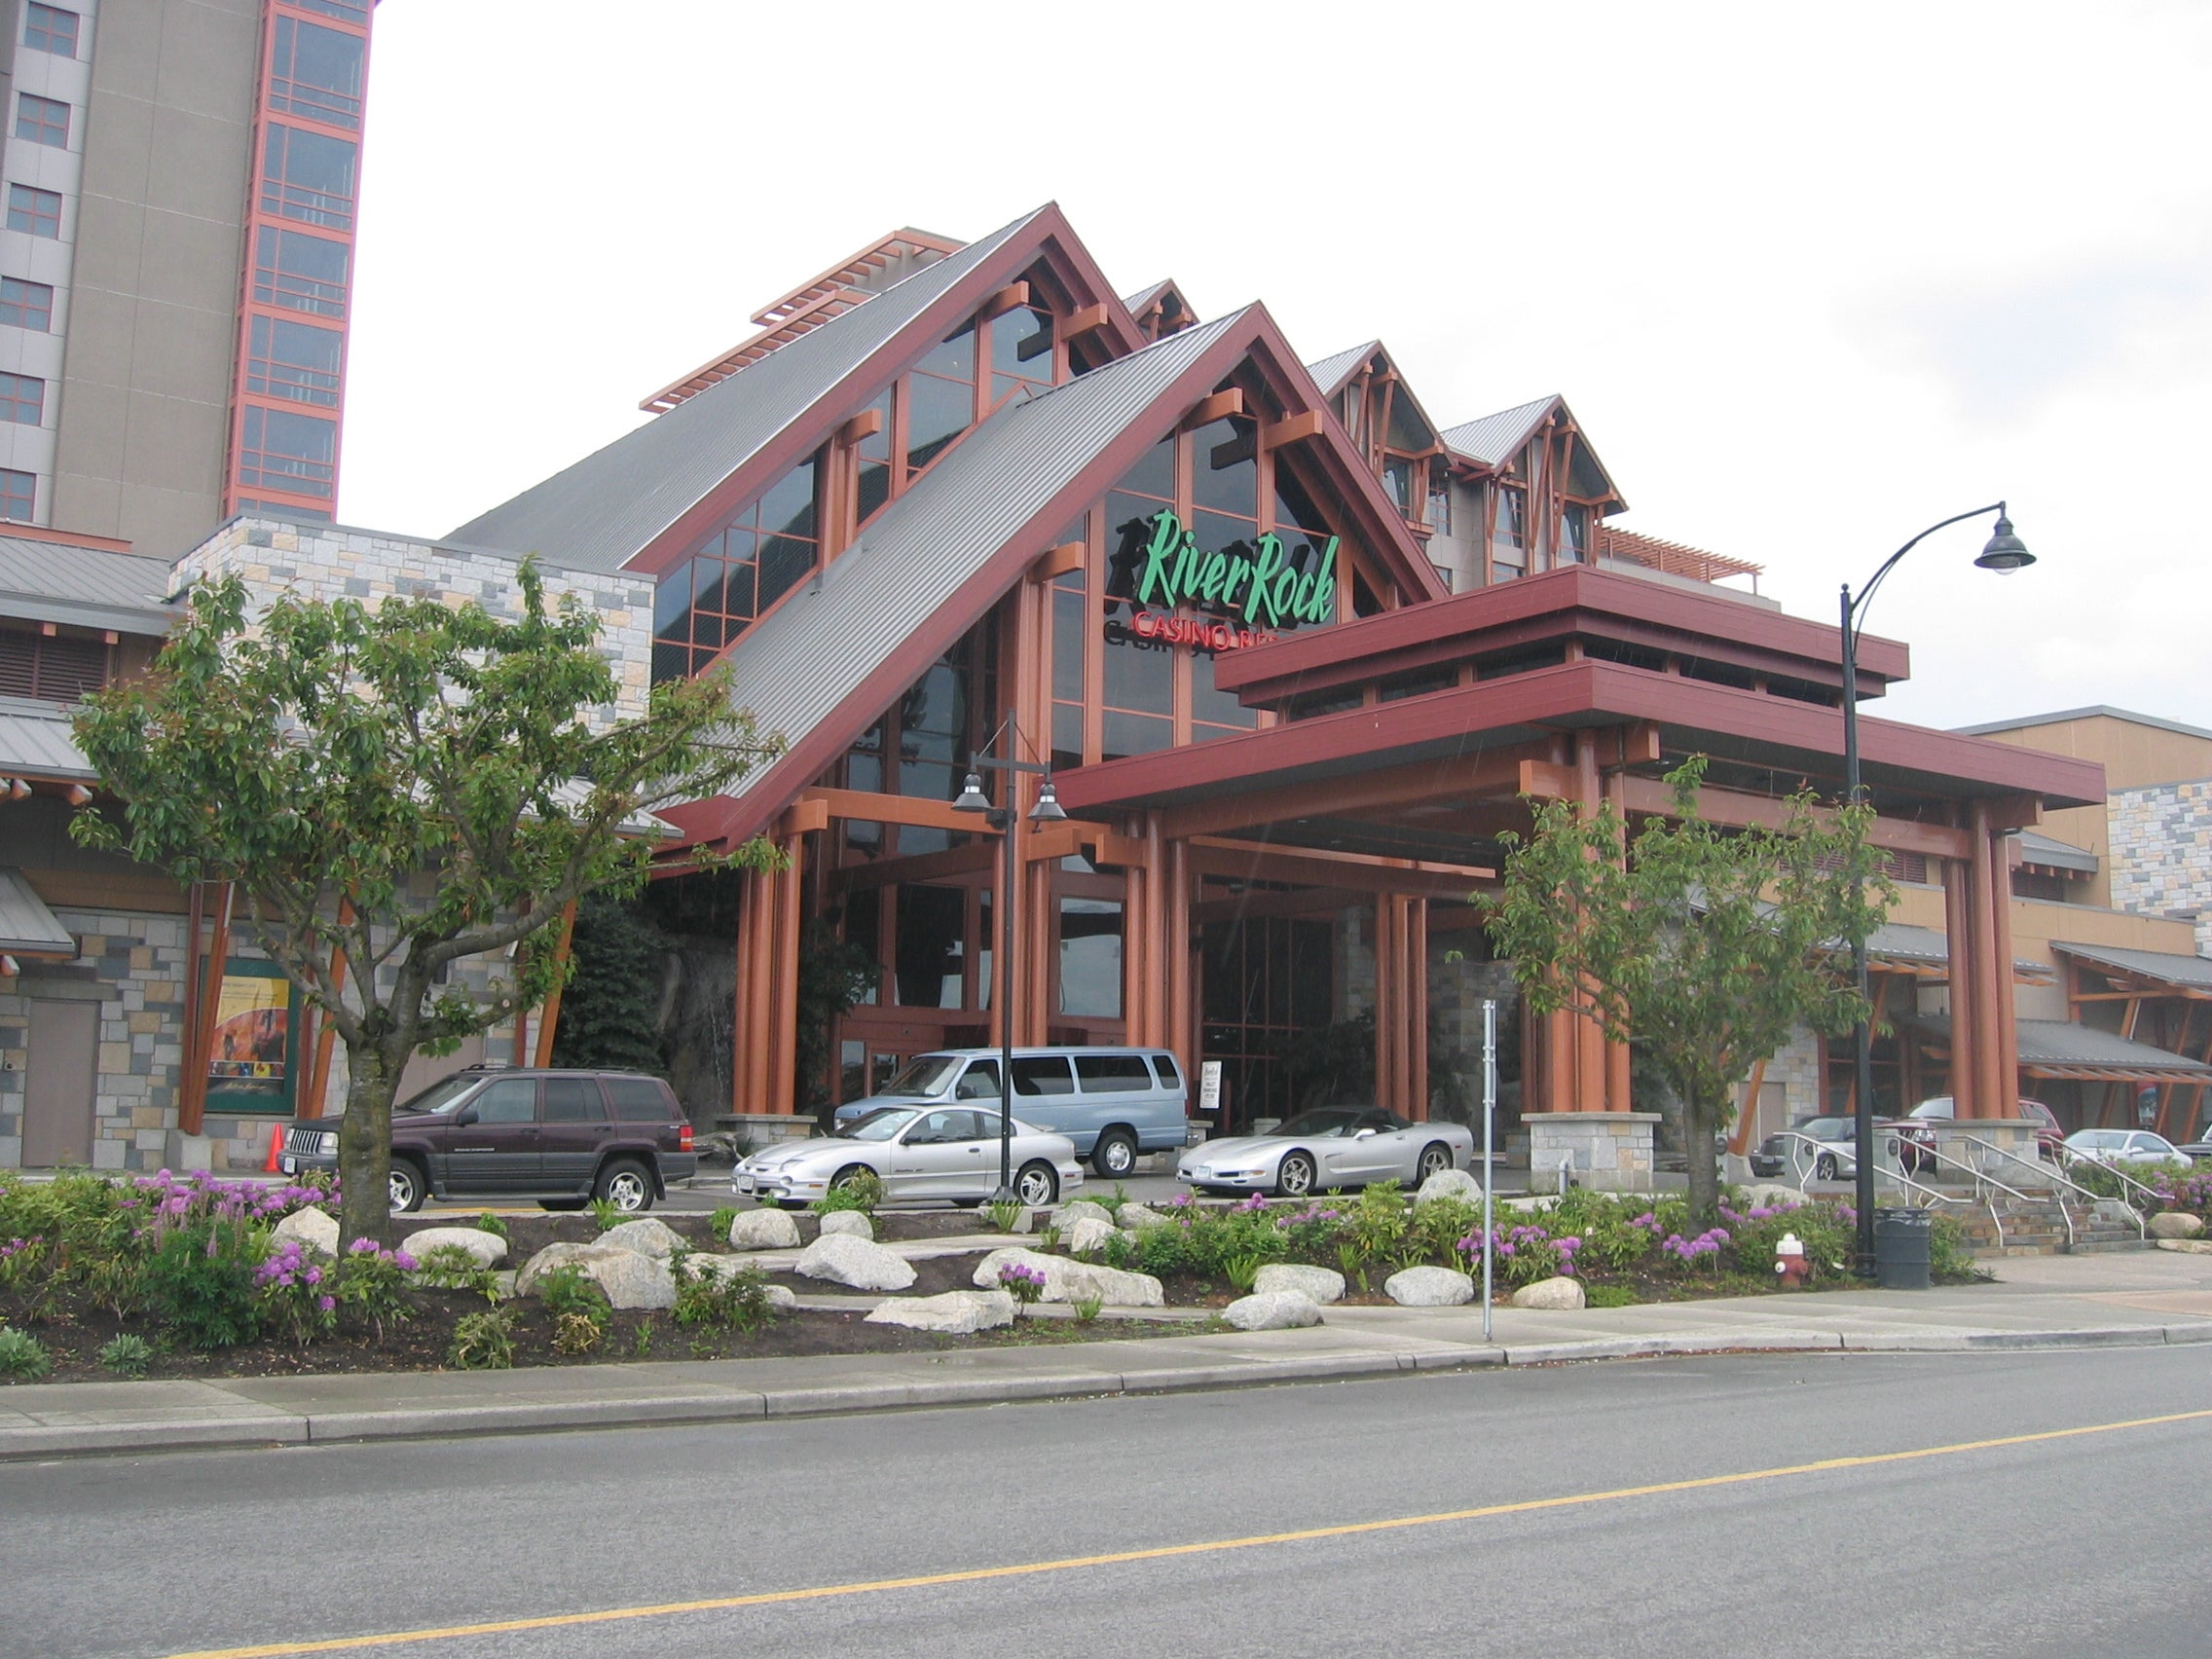 closest hotel near river rock casino